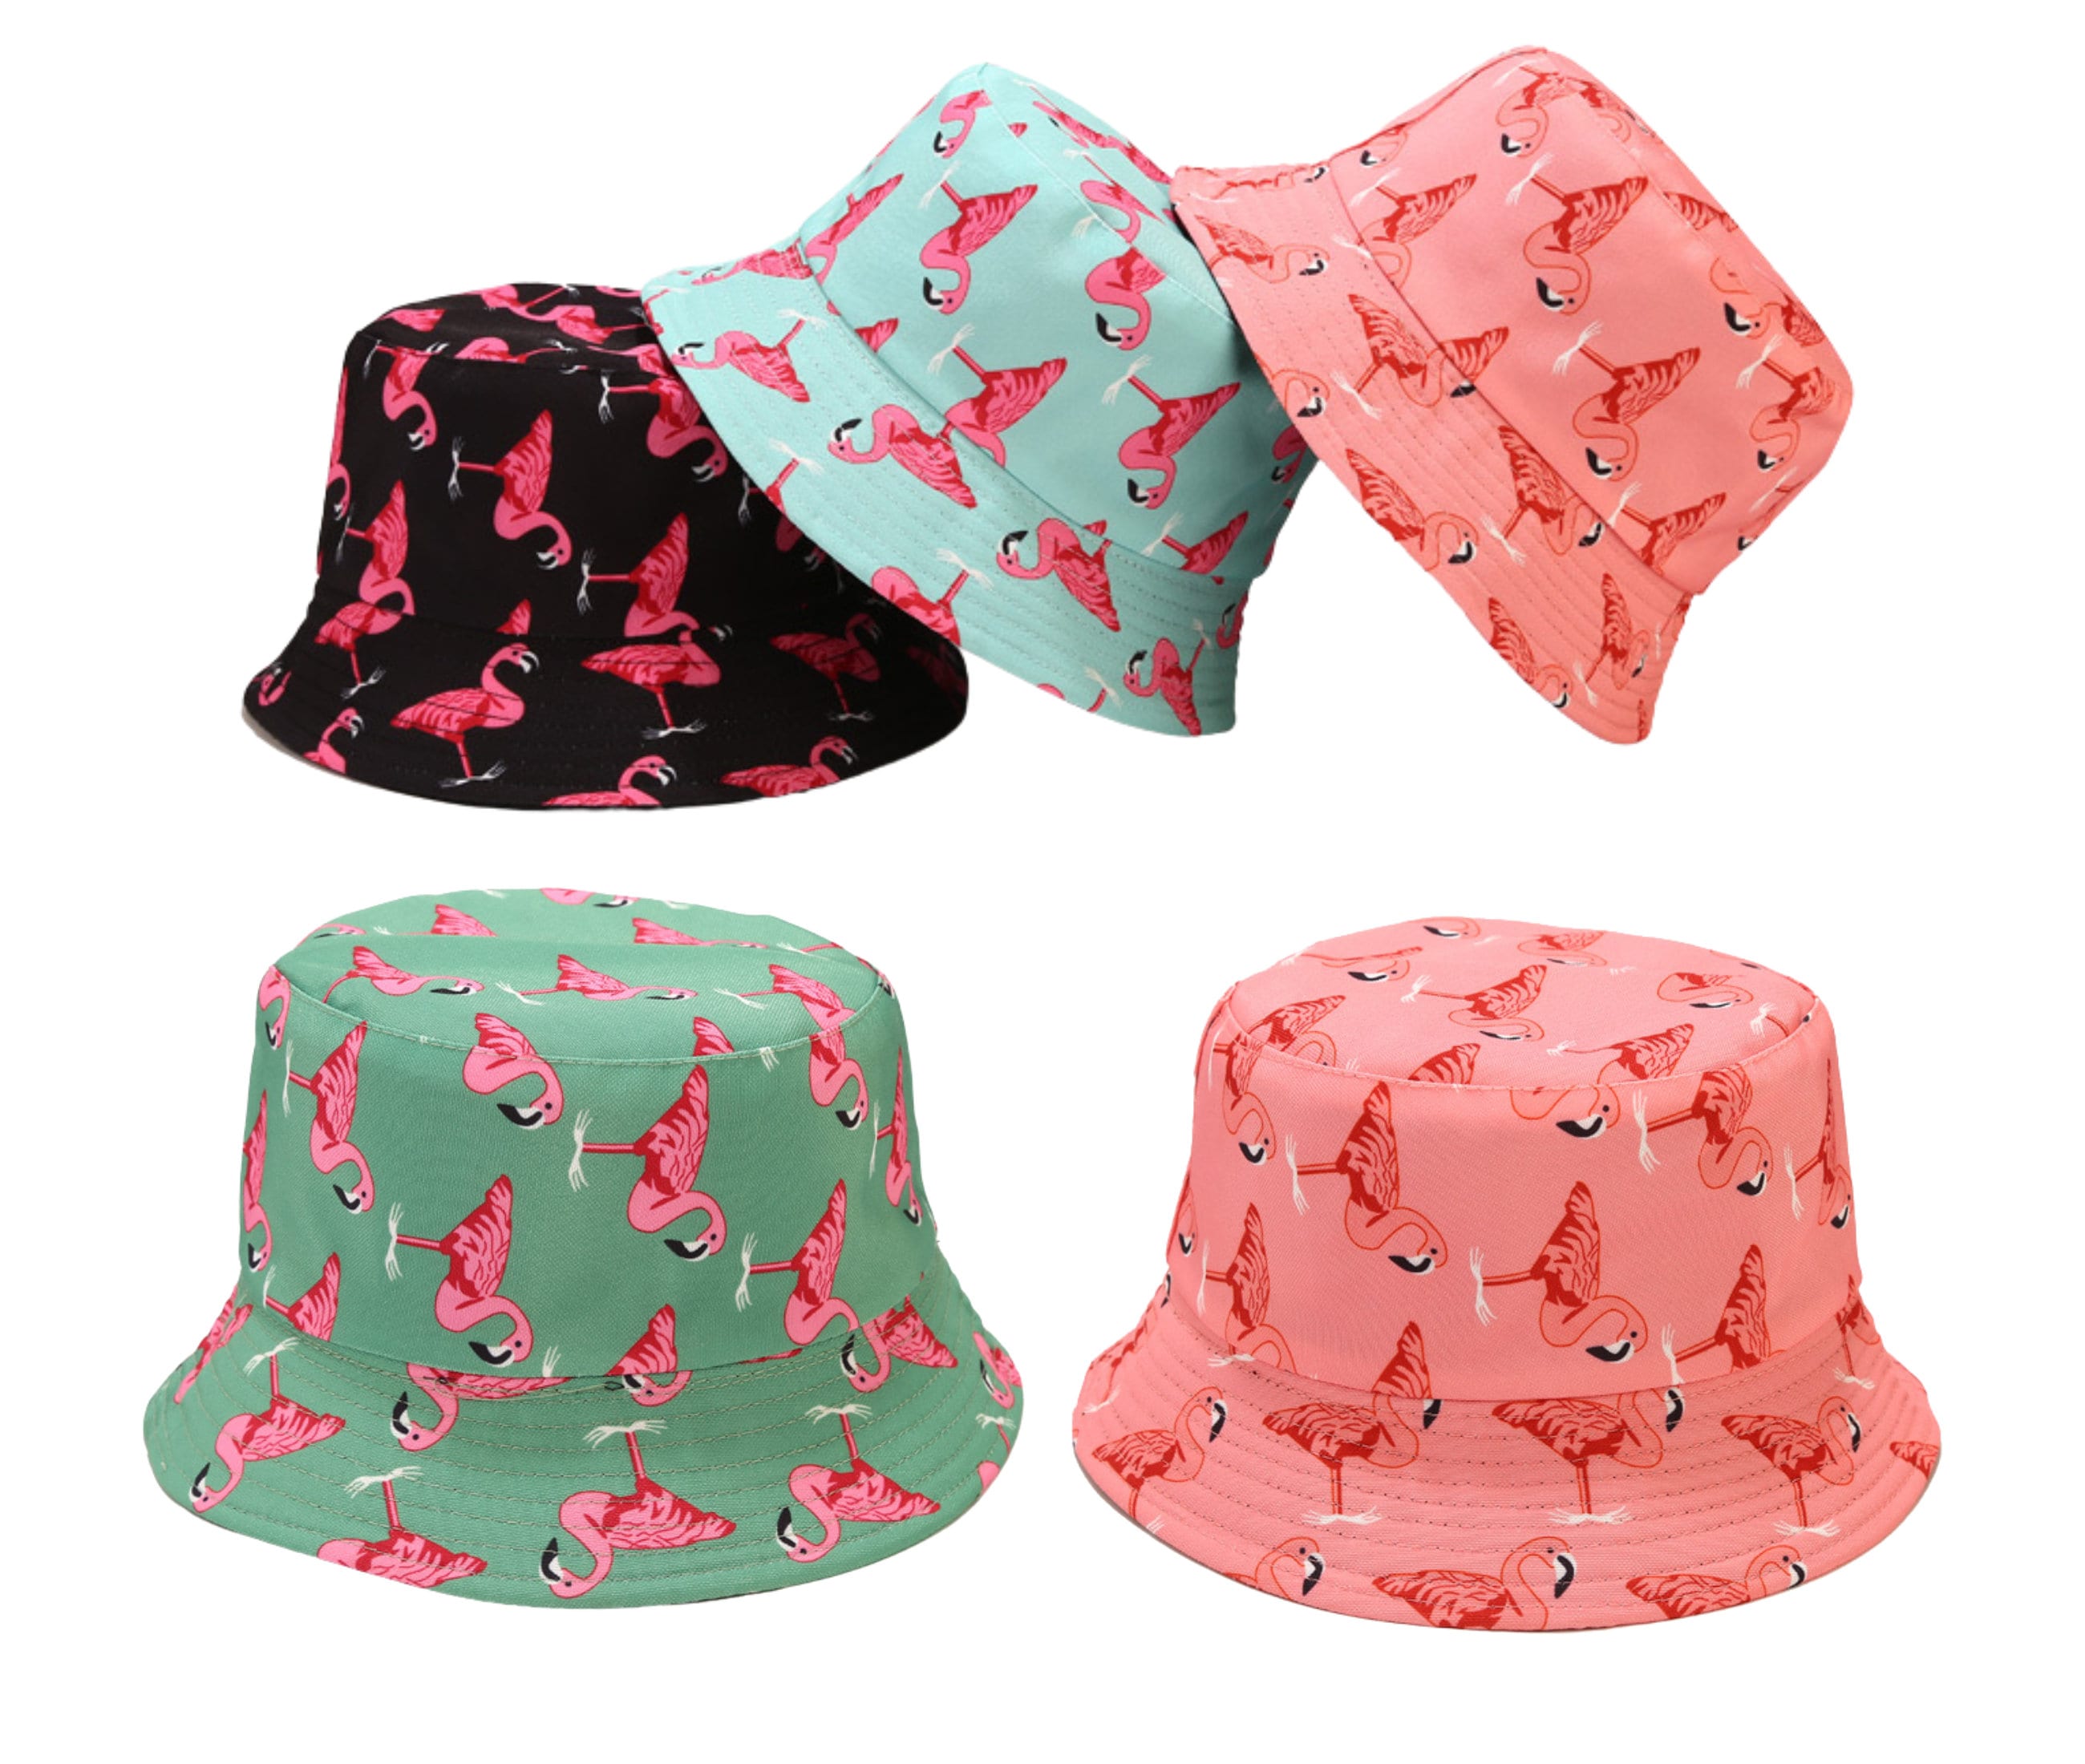 Flamingo Bucket Hat 